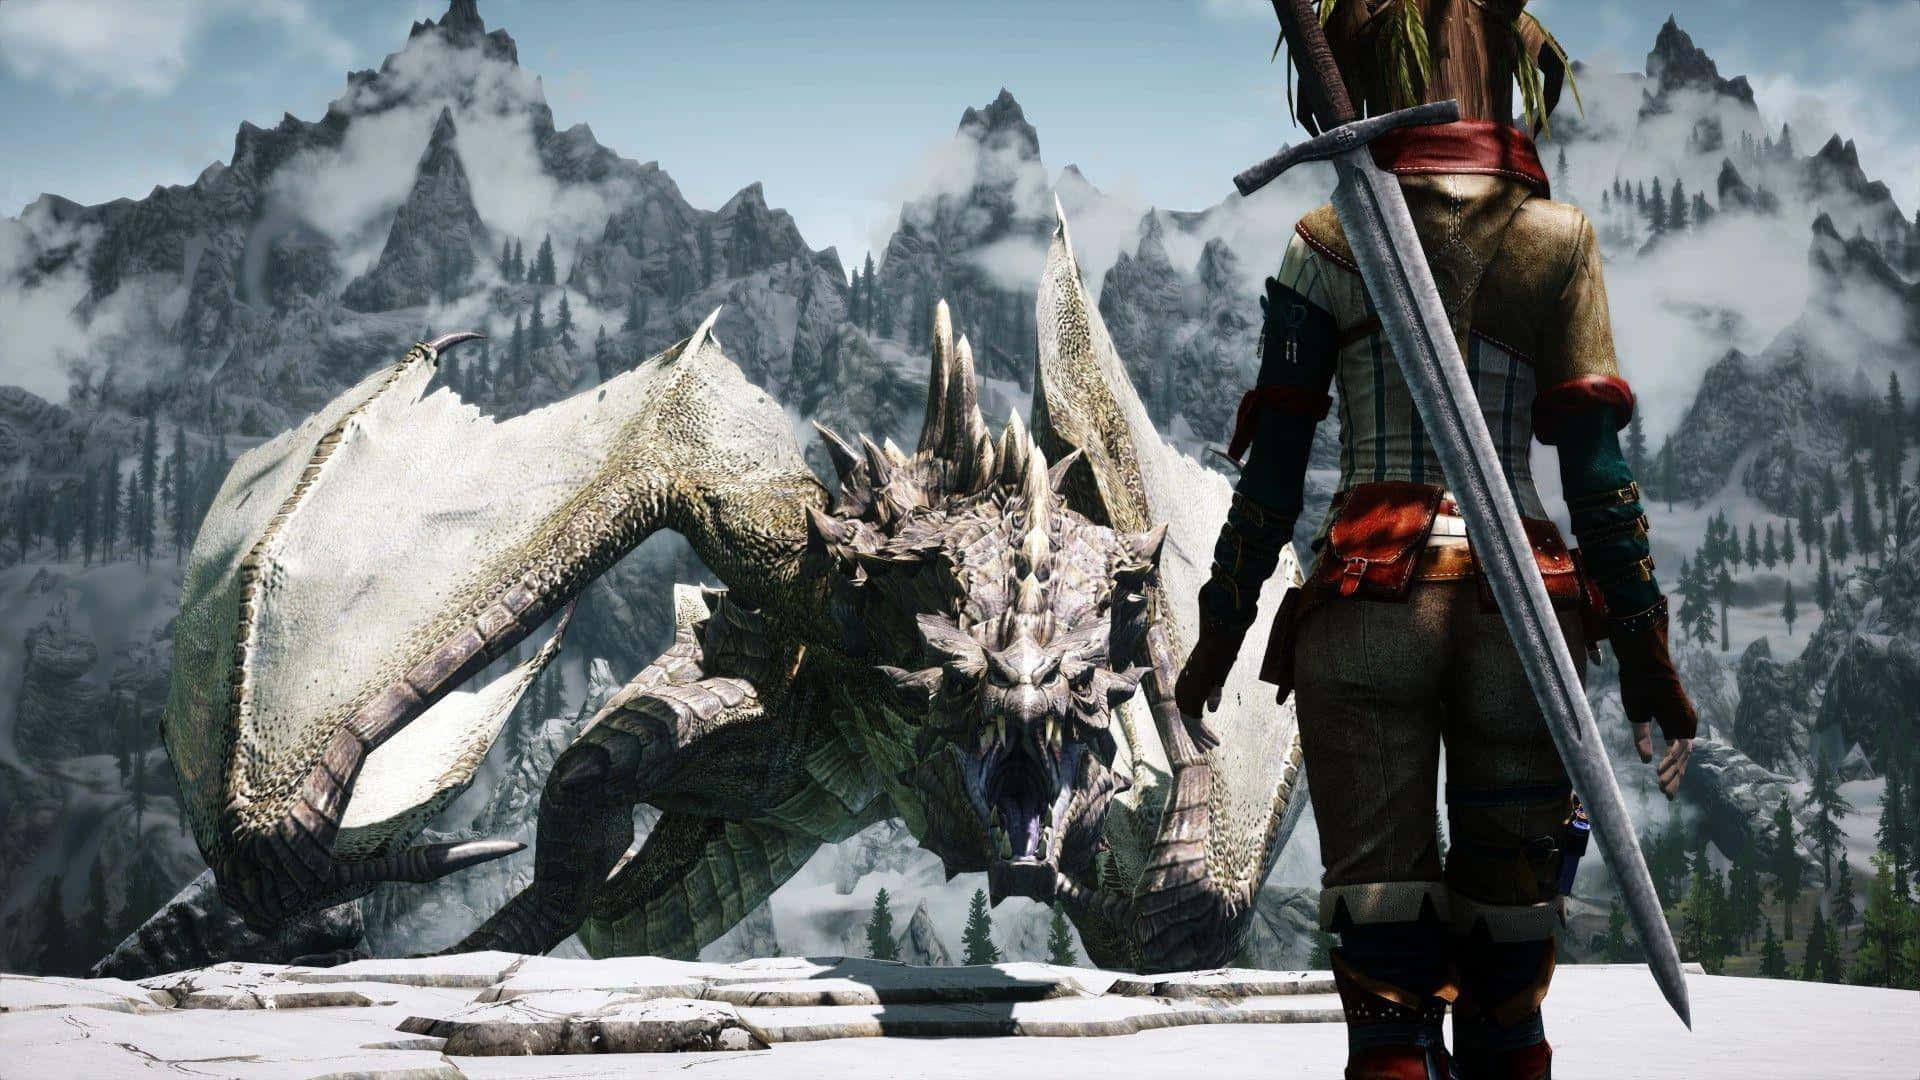 The breathtaking fantasy world of The Elder Scrolls V: Skyrim